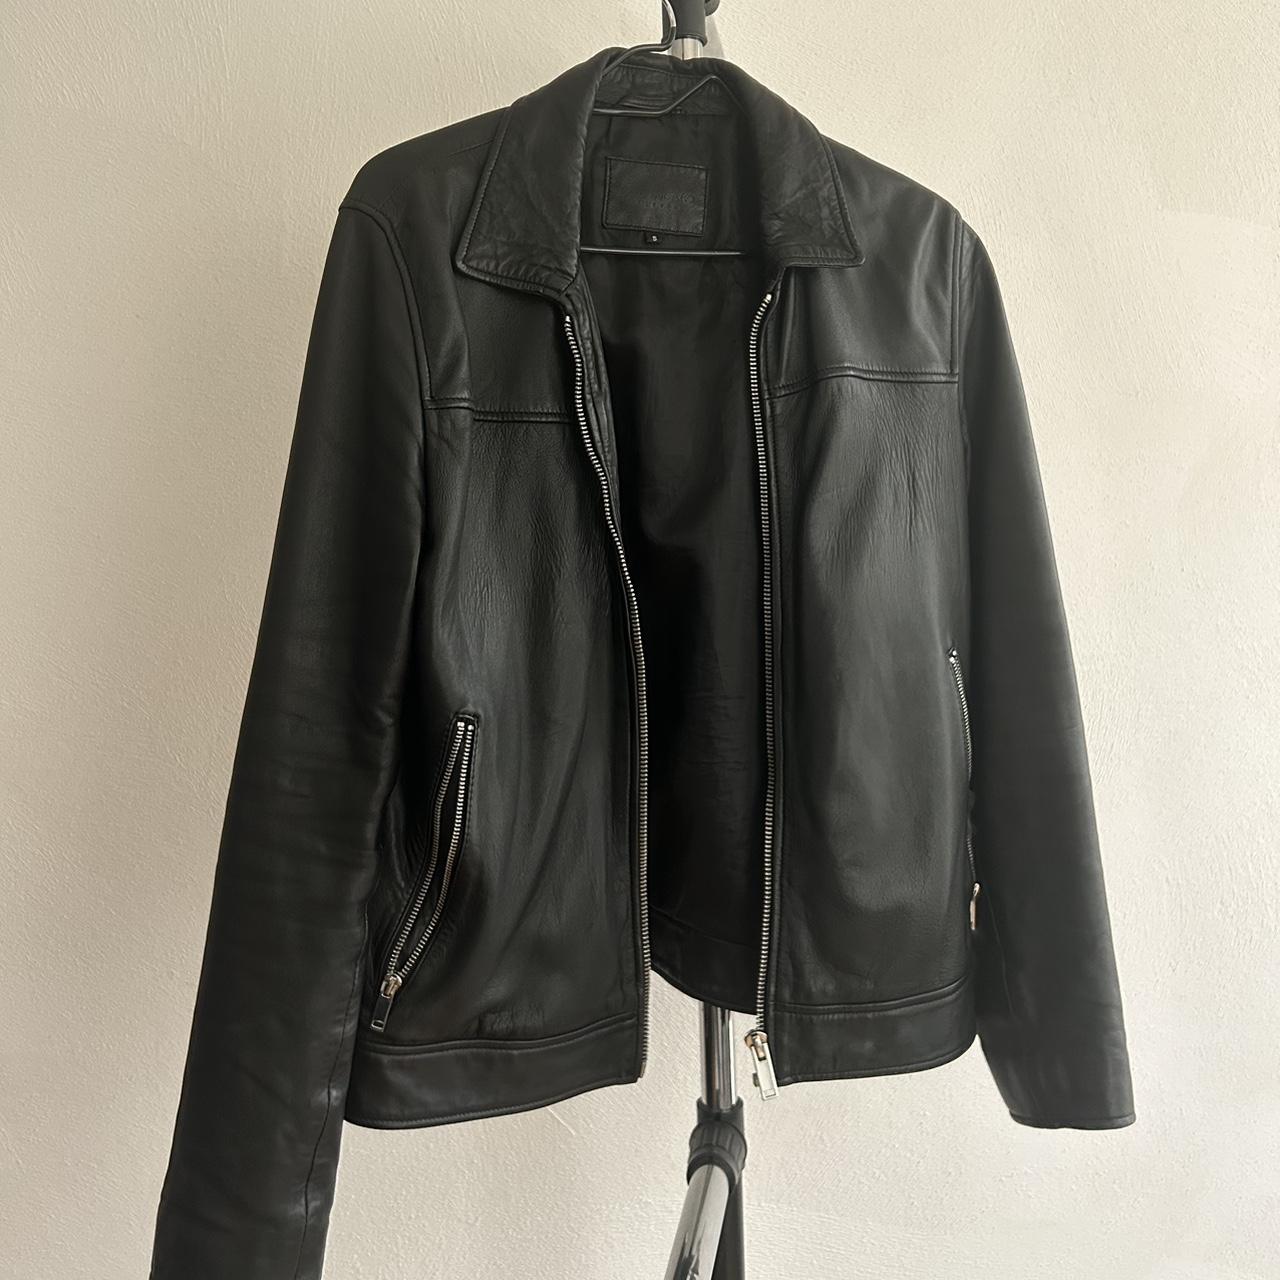 Genuine Leather jacket Working zippers Worn a... - Depop